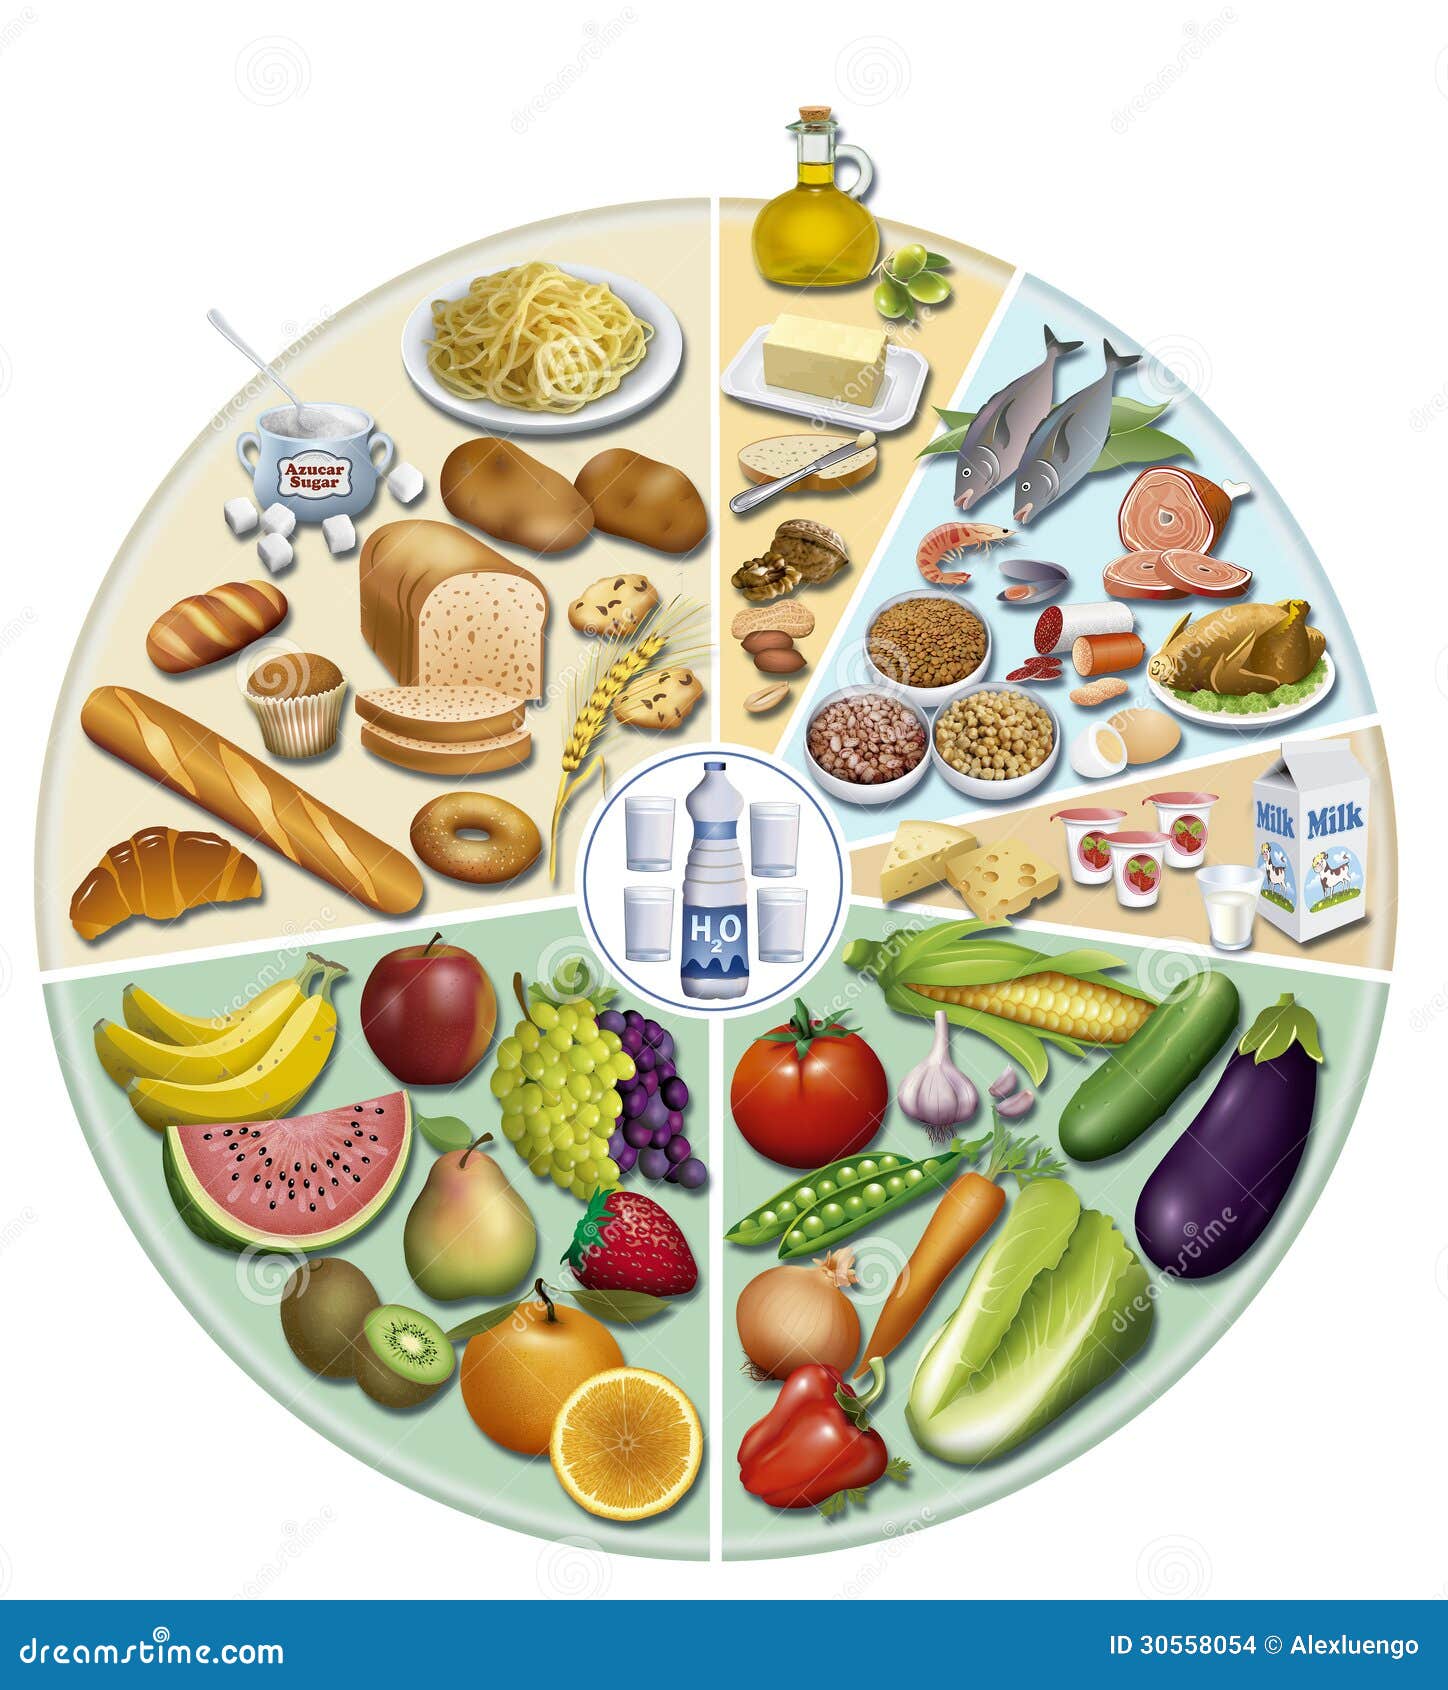 Balanced diet stock illustration. Illustration of cabbage - 30558054